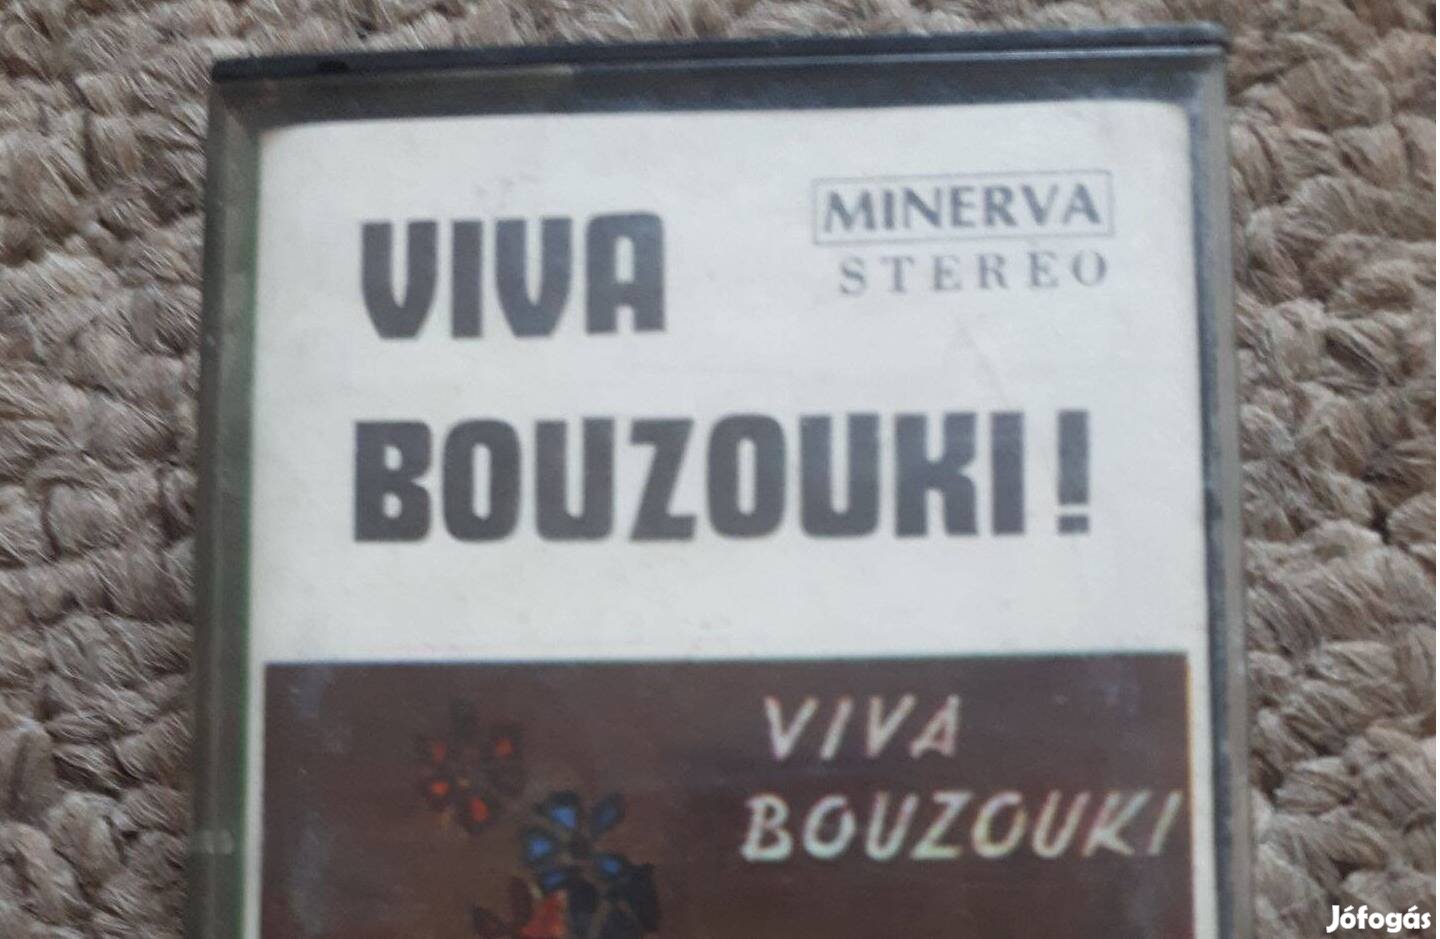 Viva Bouzouki! Görög kiadás (Minerva) 1992